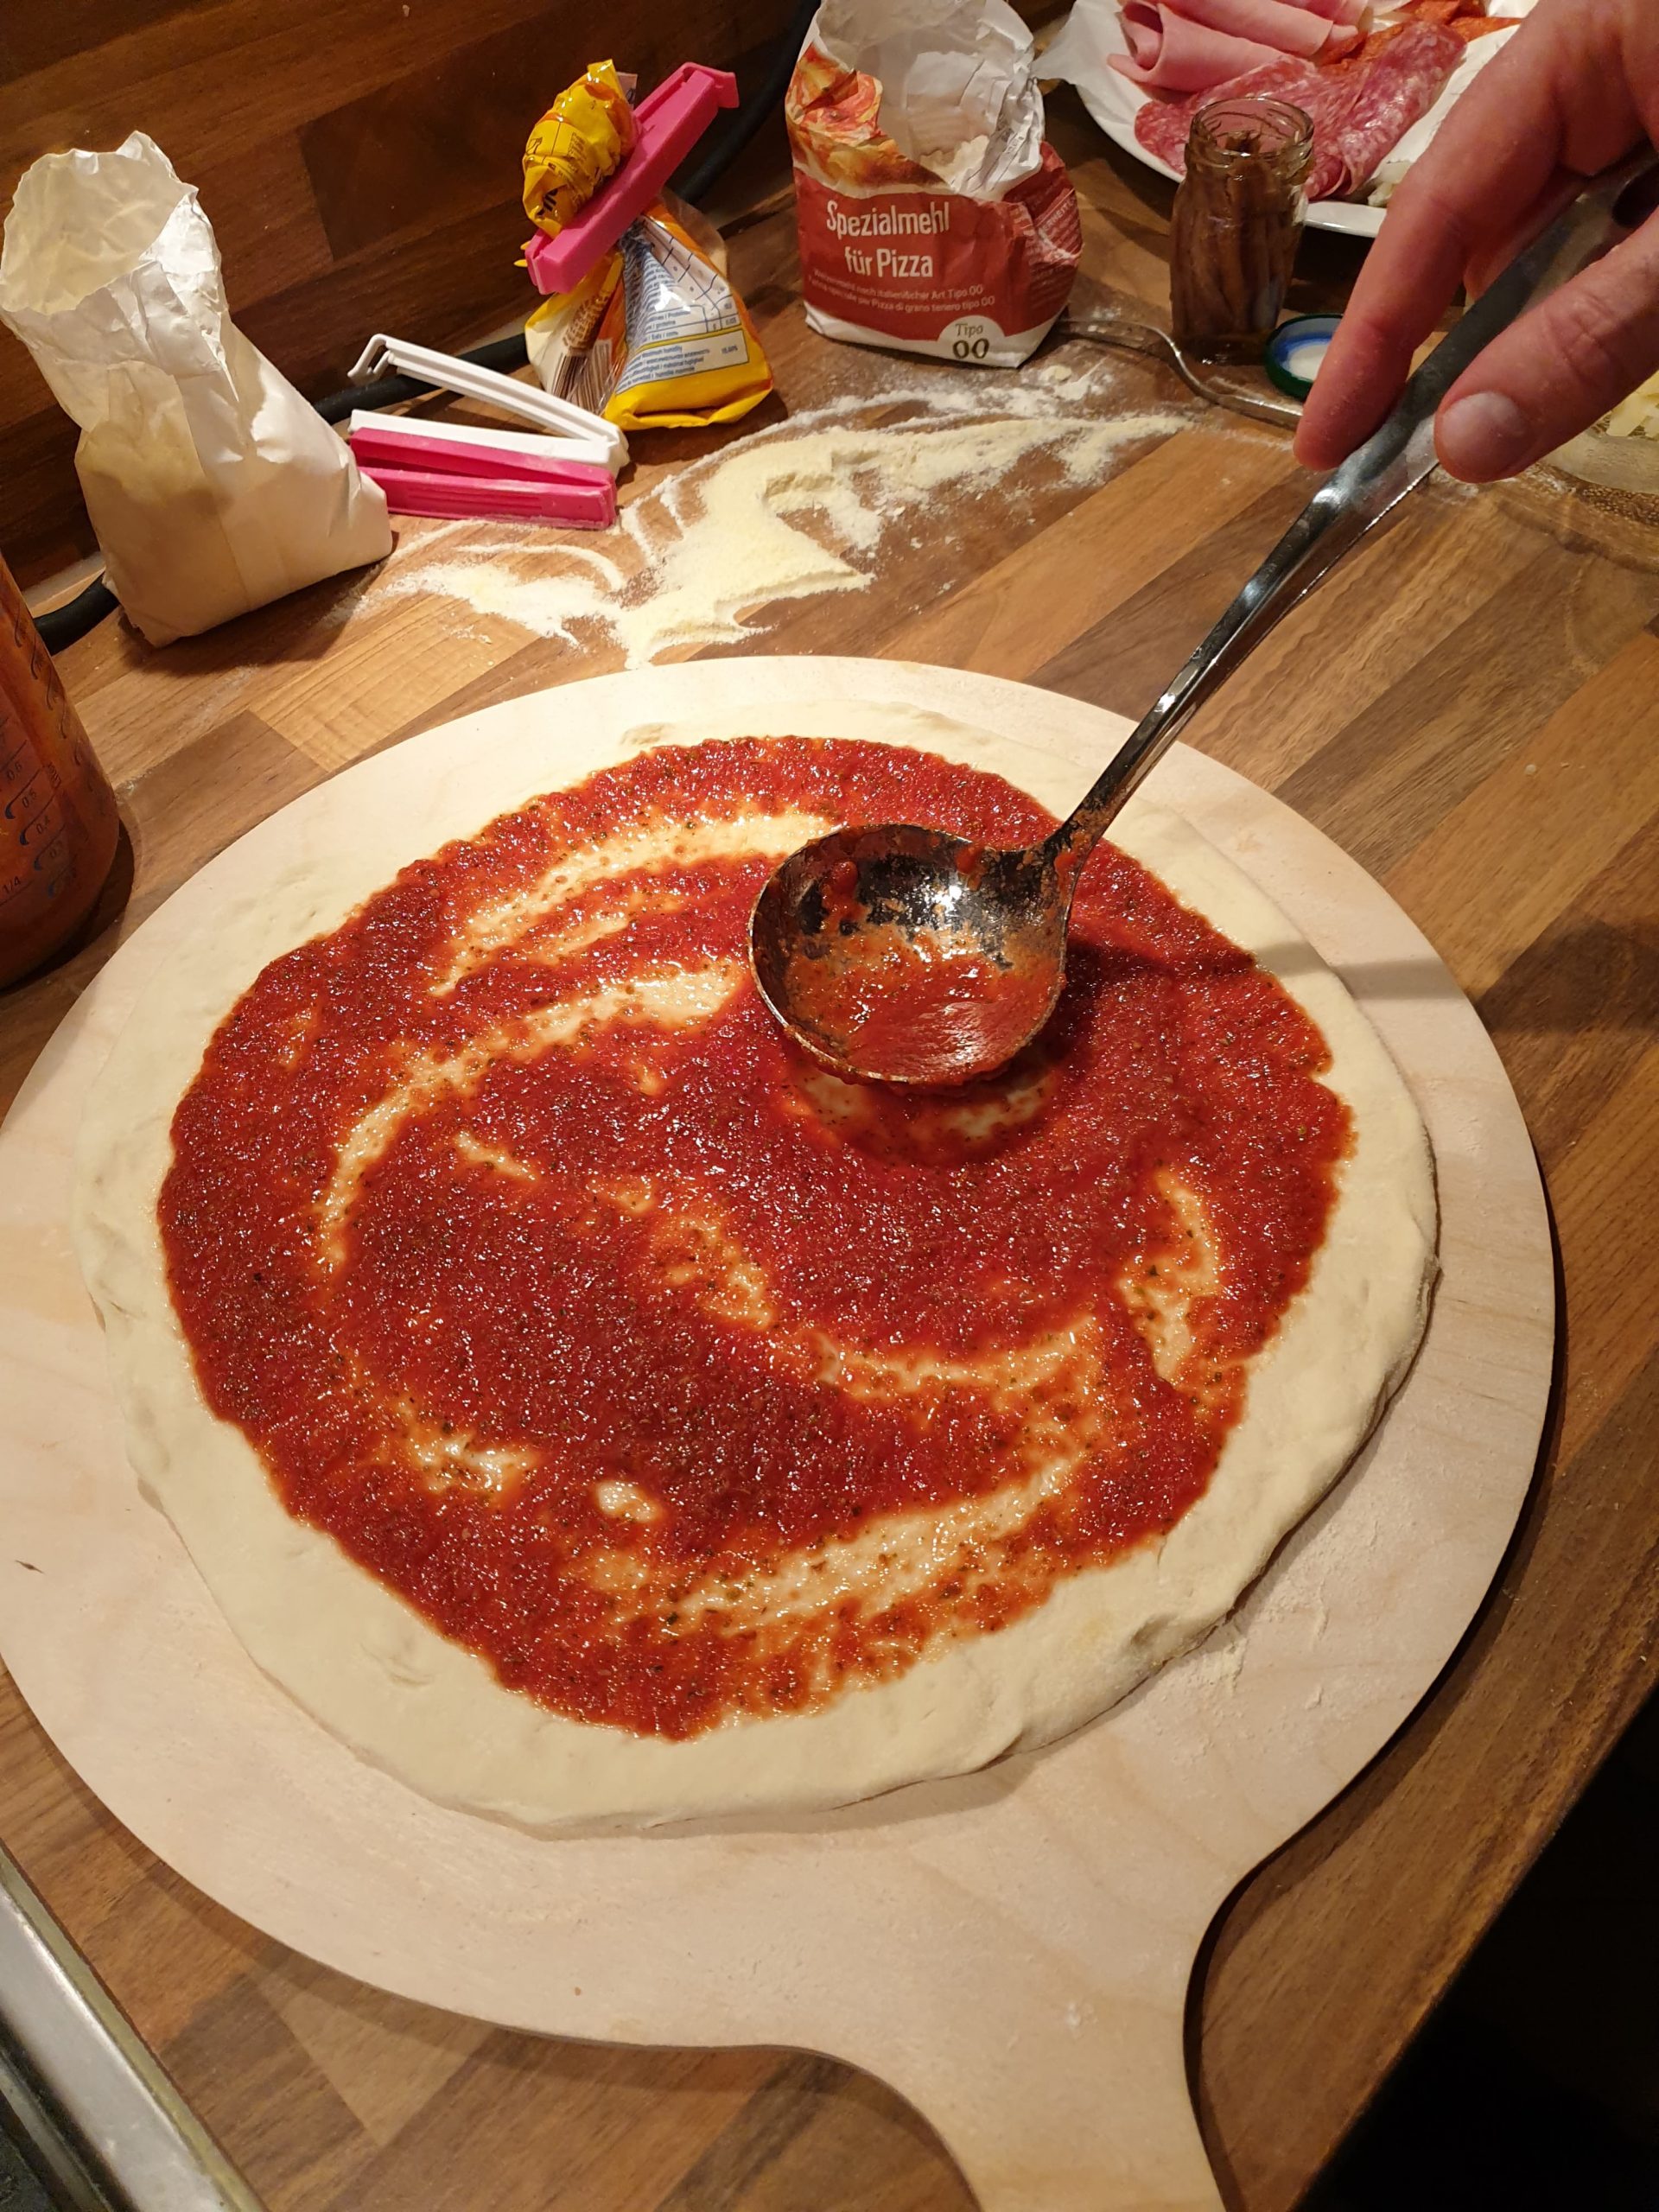 Pizzaiola